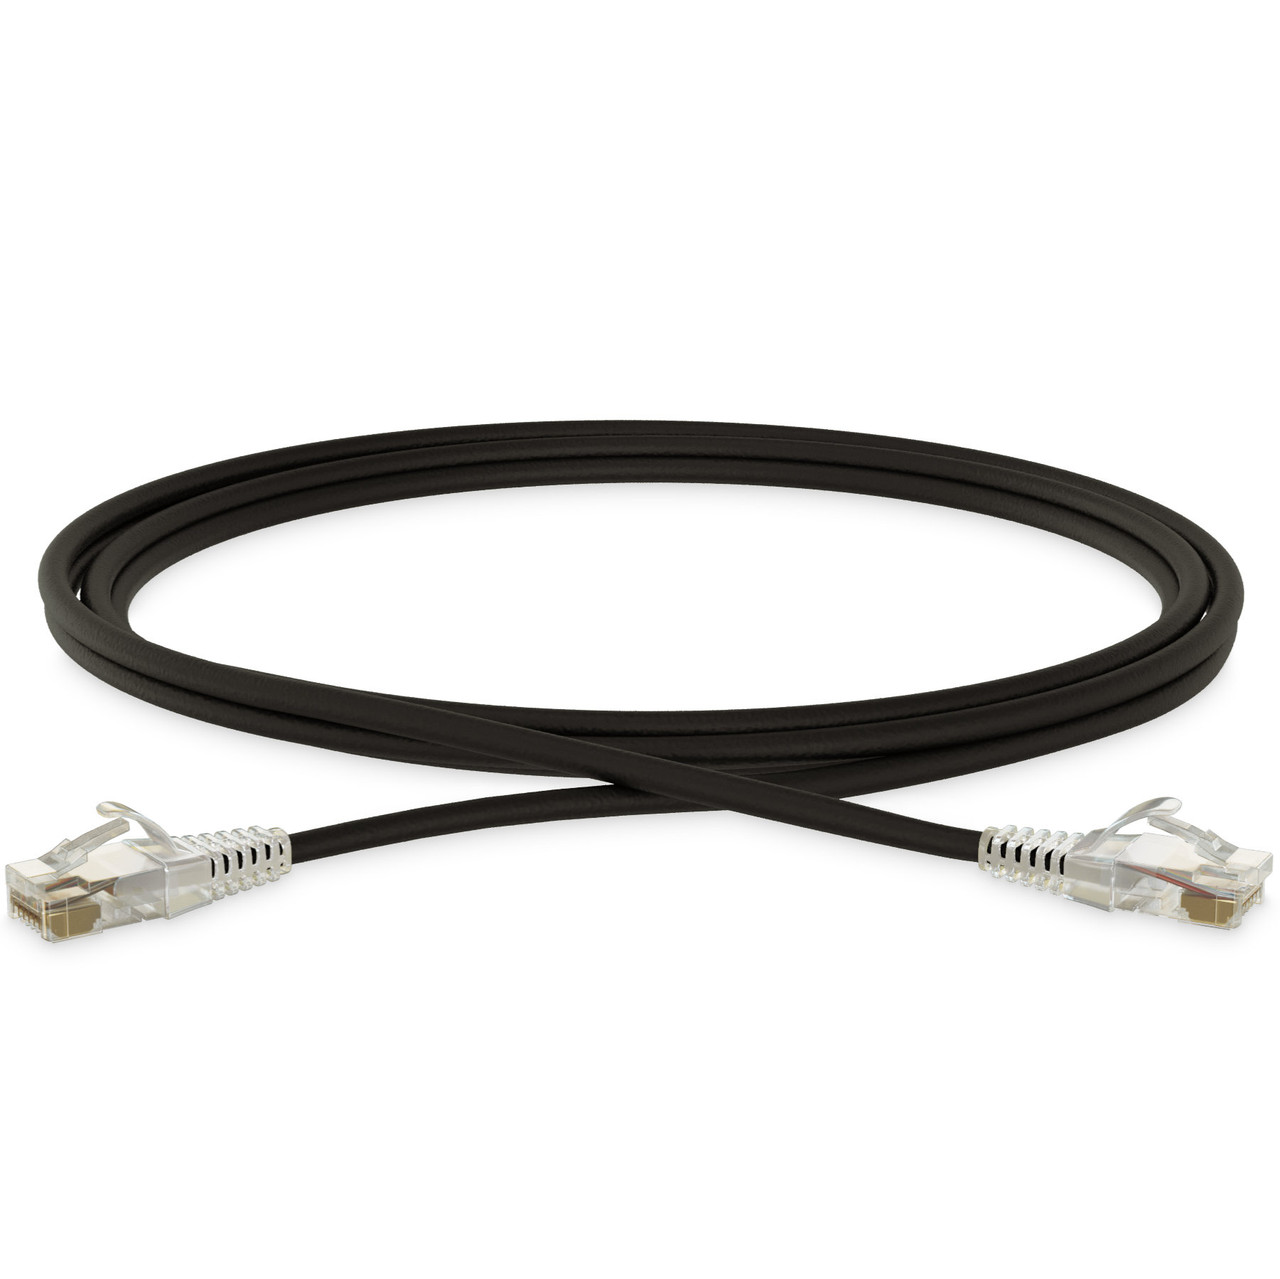 6m Black Ethernet Cable - CAT5e Network Cable